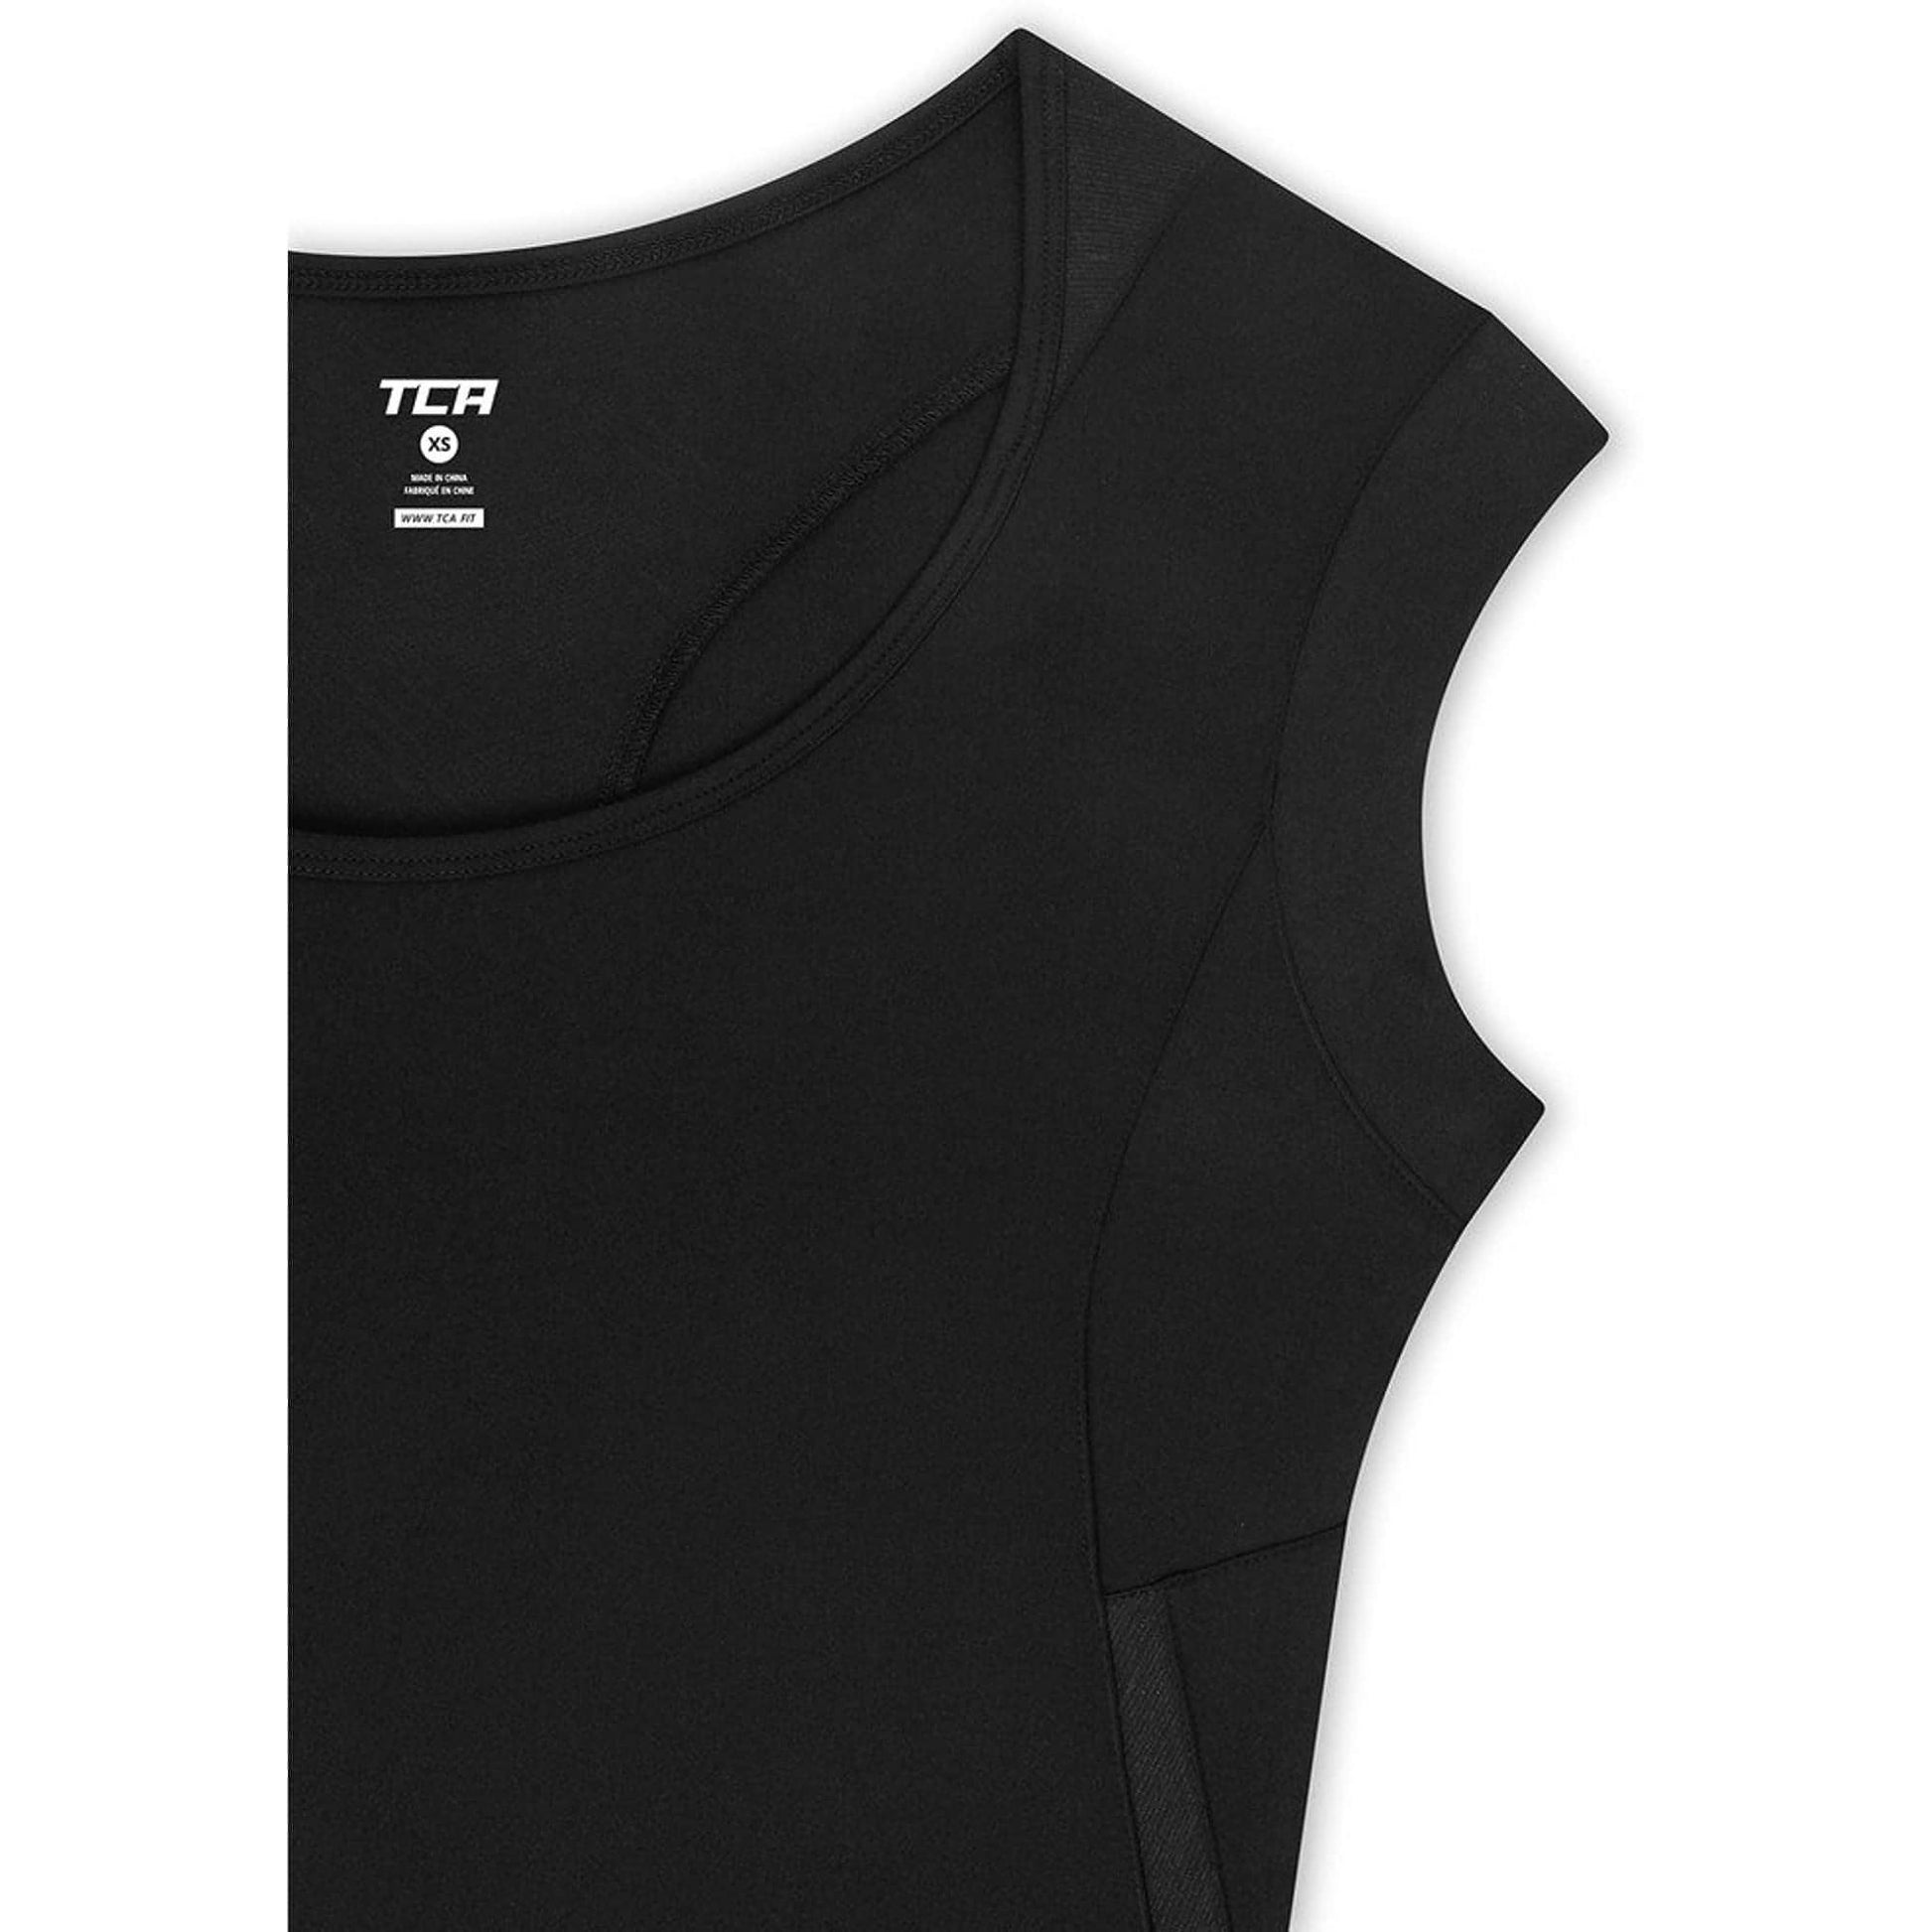 Tca Tech Lightweight Short Sleeve S  Wtte Black Details